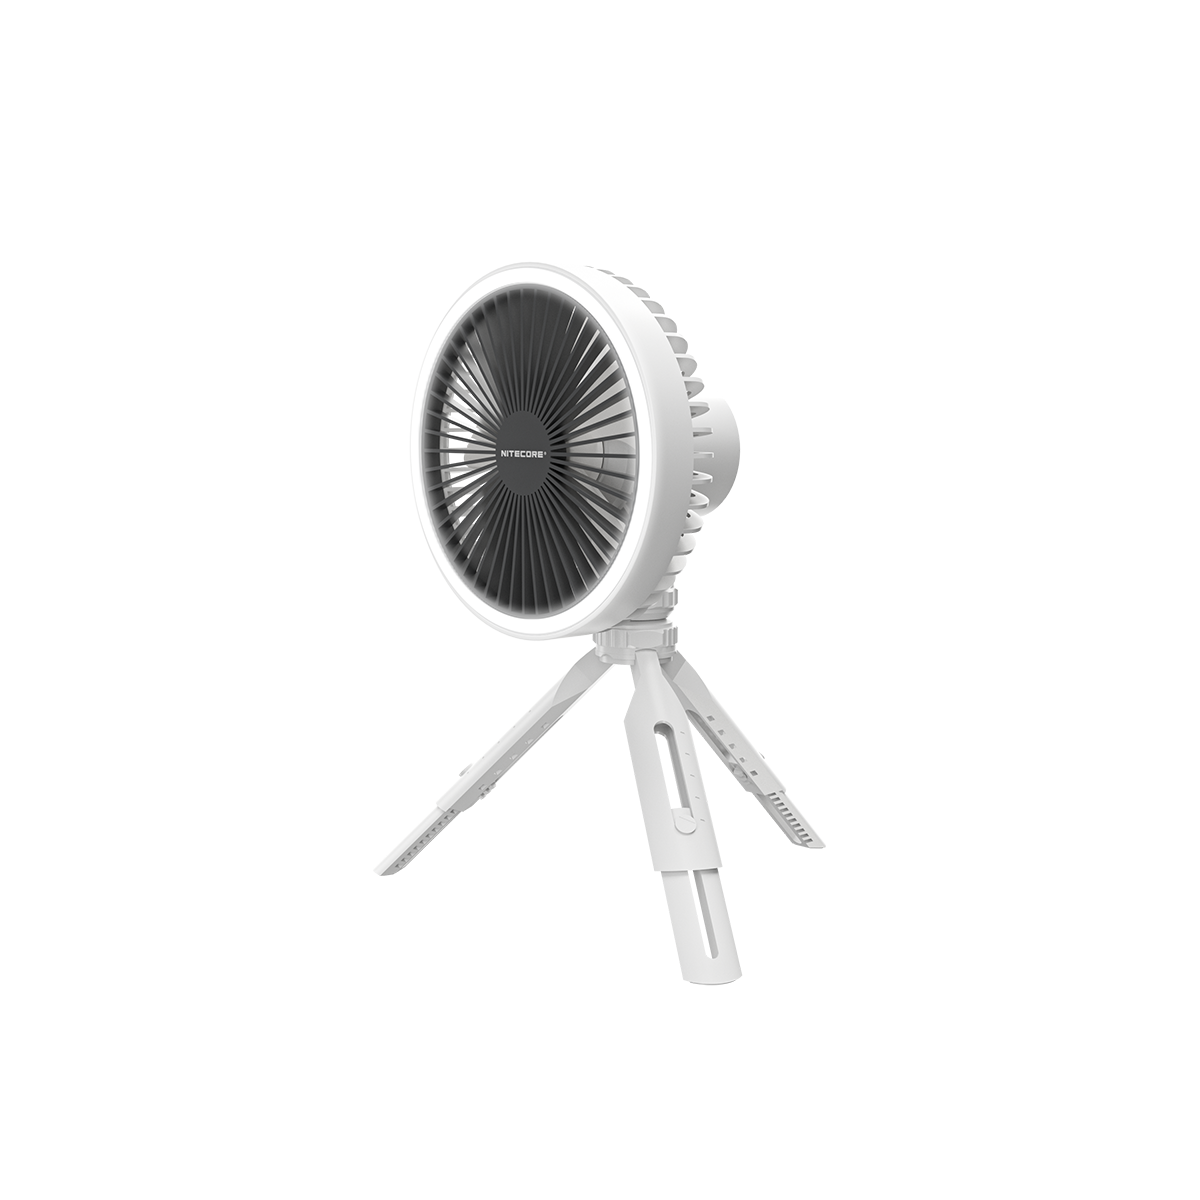 NEF10 Ventilador Recargable con Luz LED (10,000mAh)